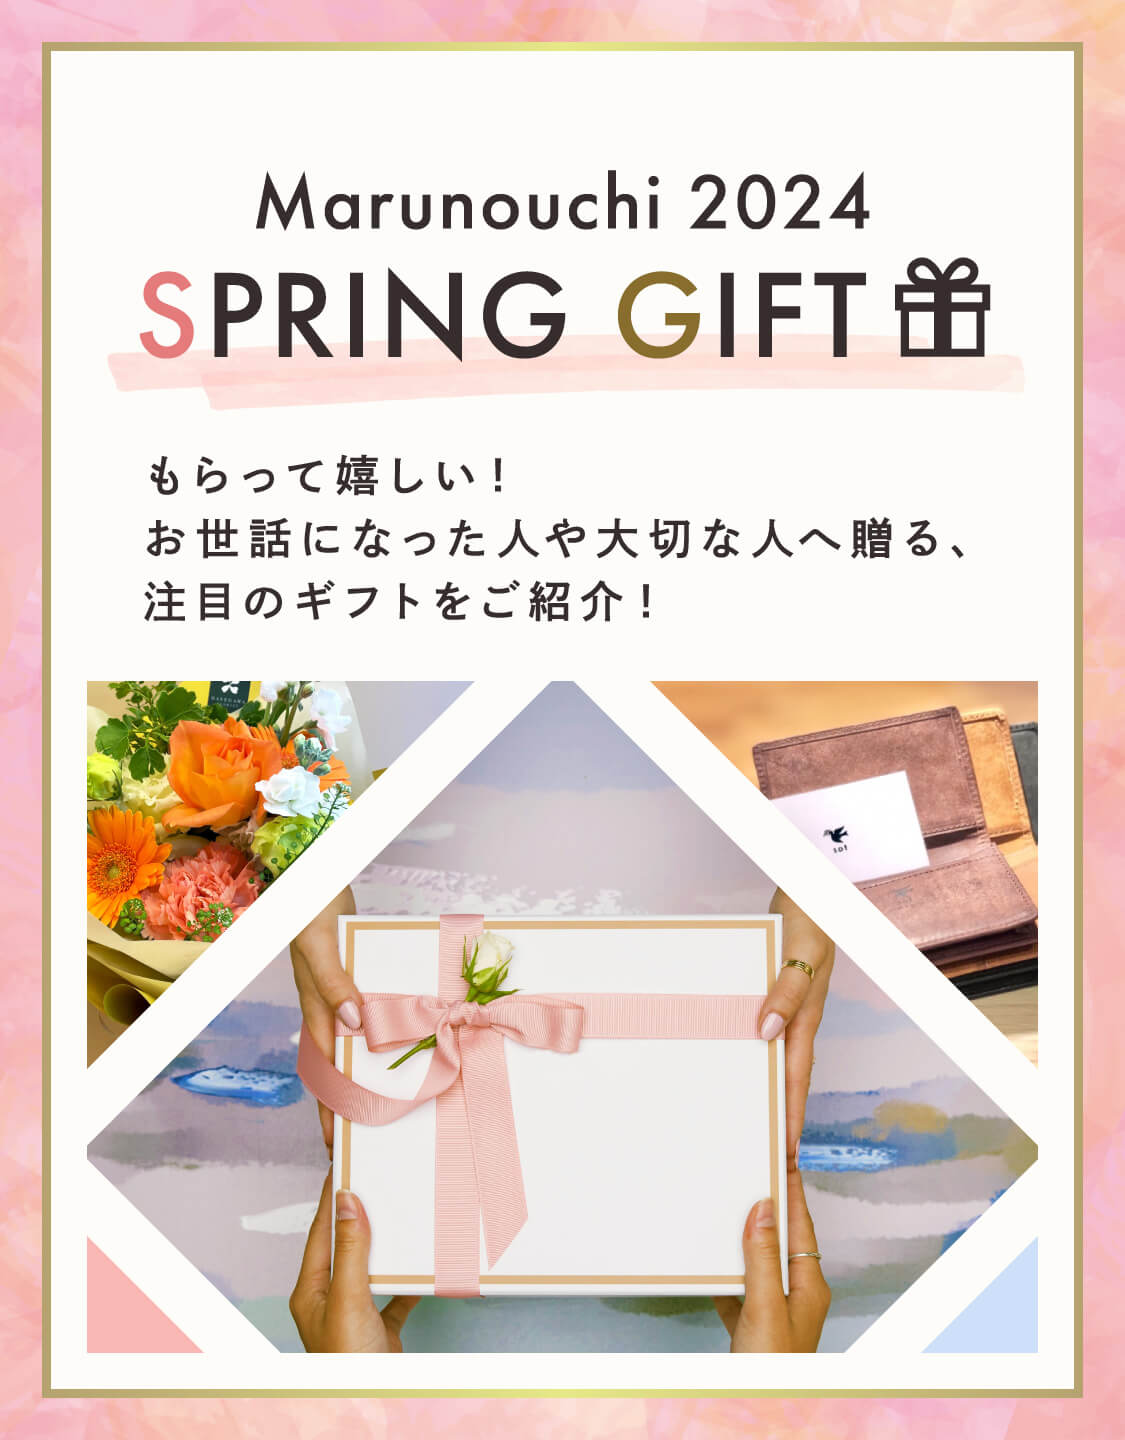 Marunouchi 2024 SPRING GIFT 받고 기쁘다! 신세를 친 사람이나 소중한 사람에게 주는, 주목의 선물을 소개!